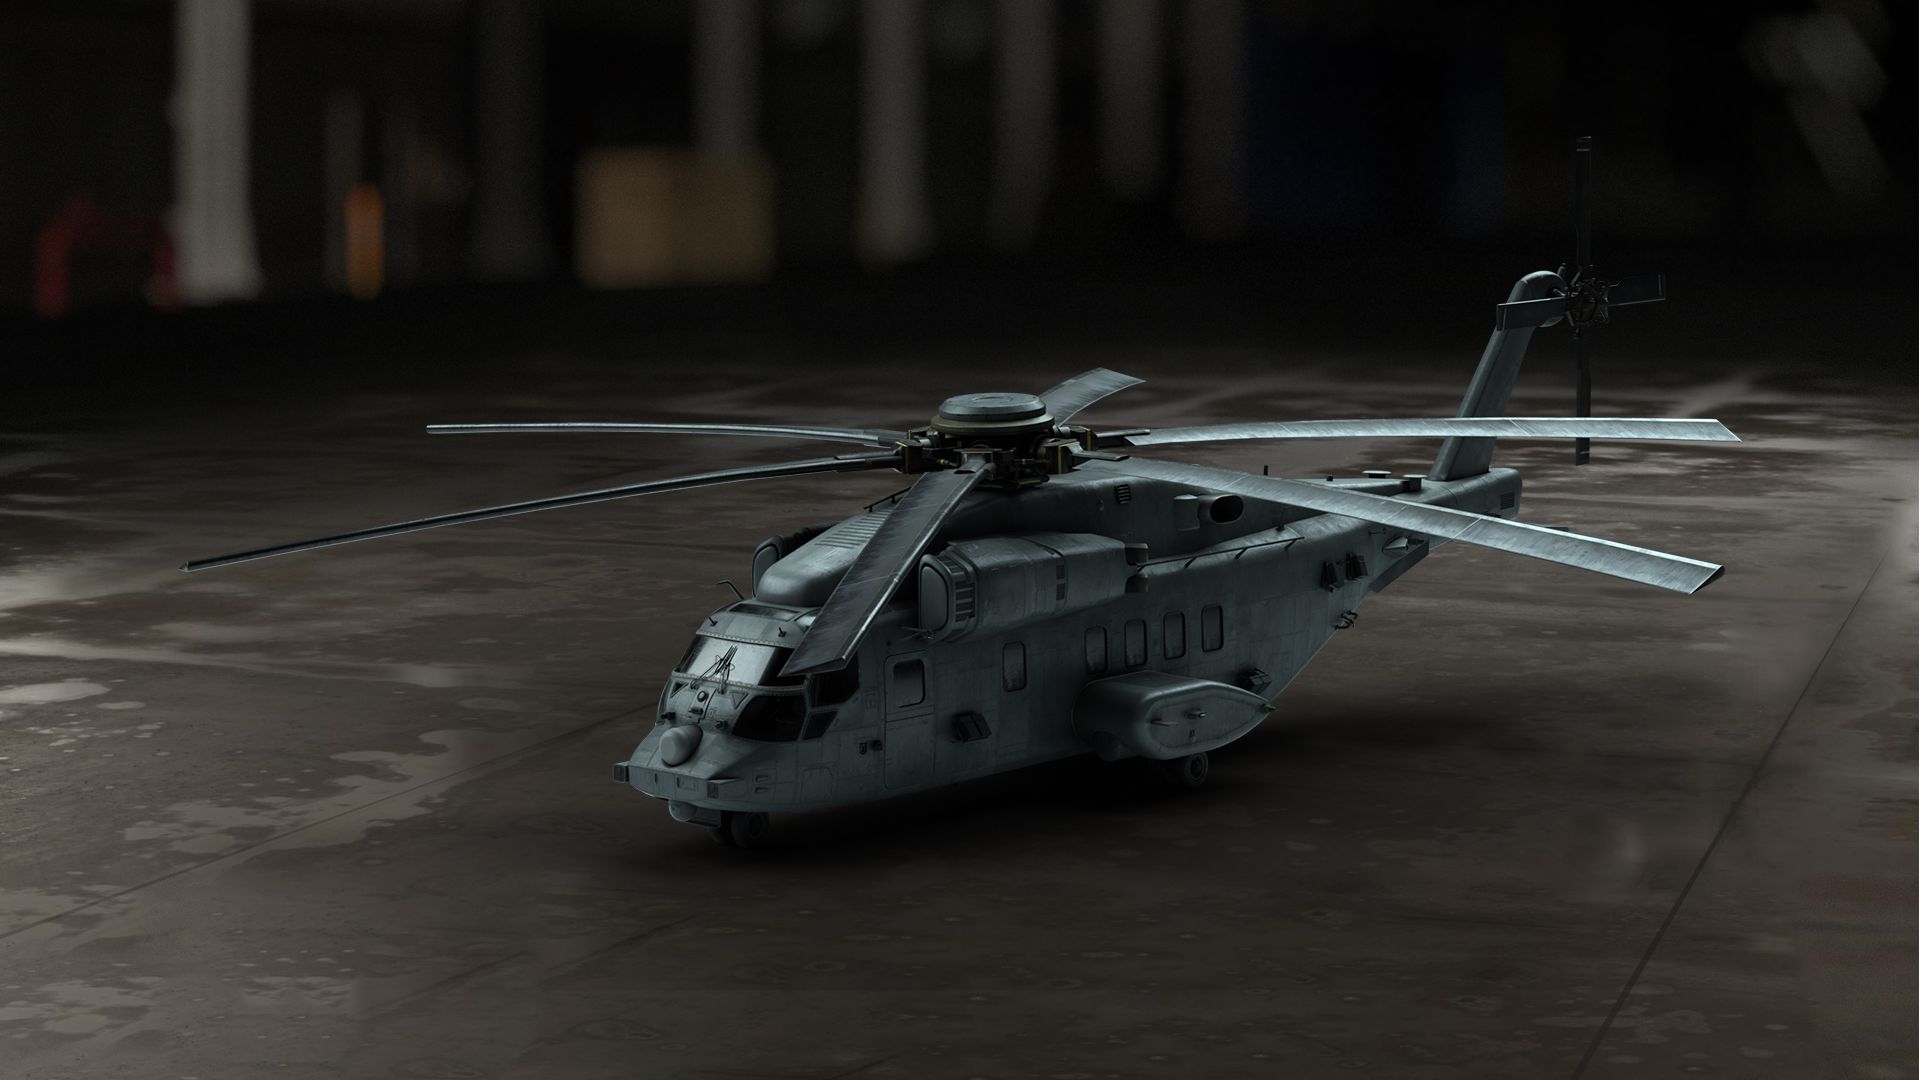 Modern Warfare 2 Vehicles: The heavy chopper can be seen